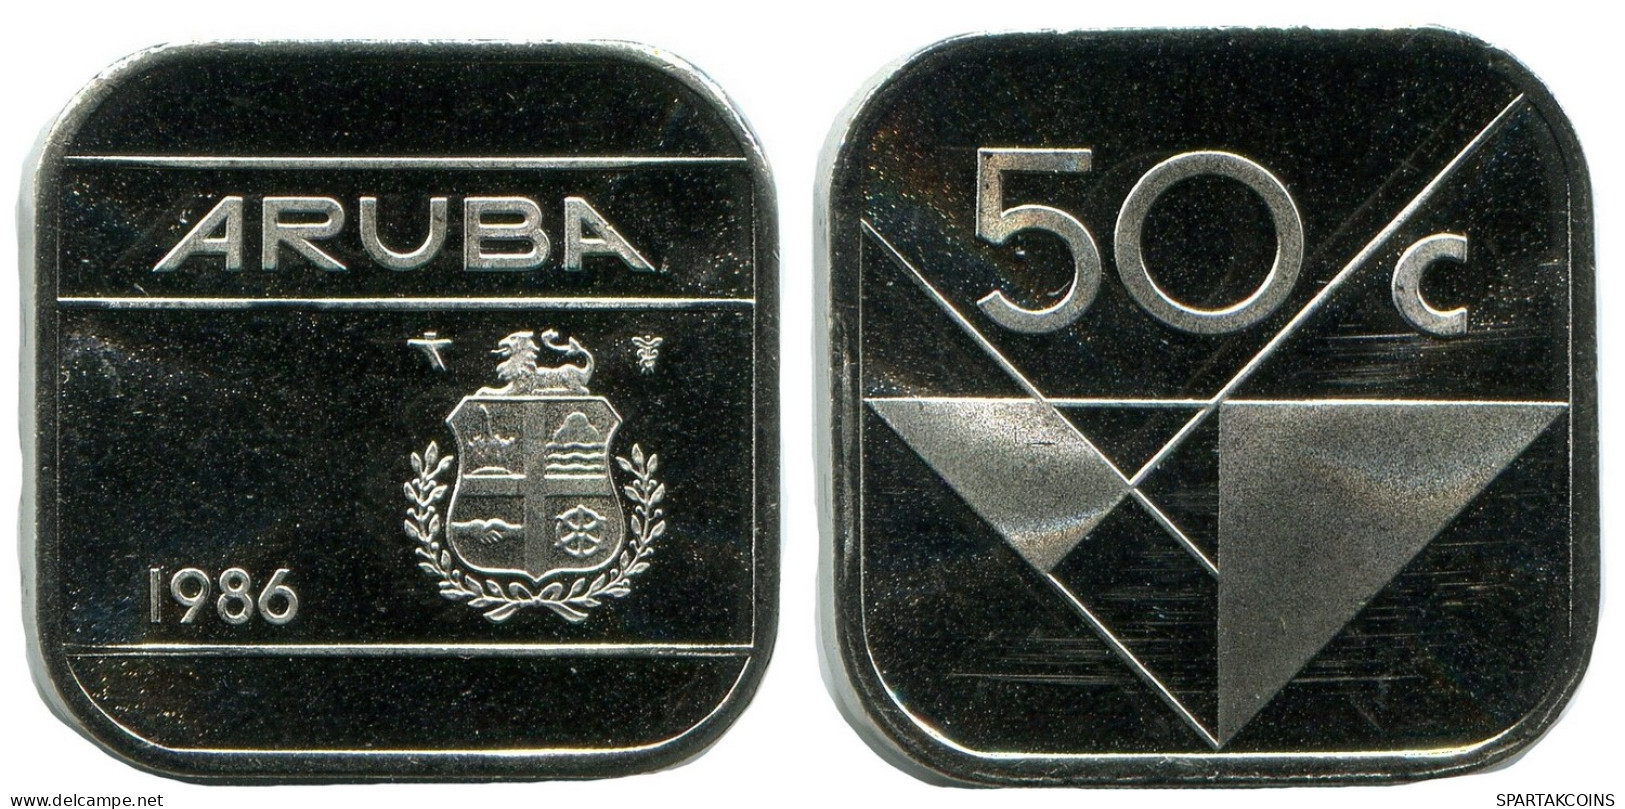 50 CENTS 1986 ARUBA Coin (From BU Mint Set) #AH053.U - Aruba